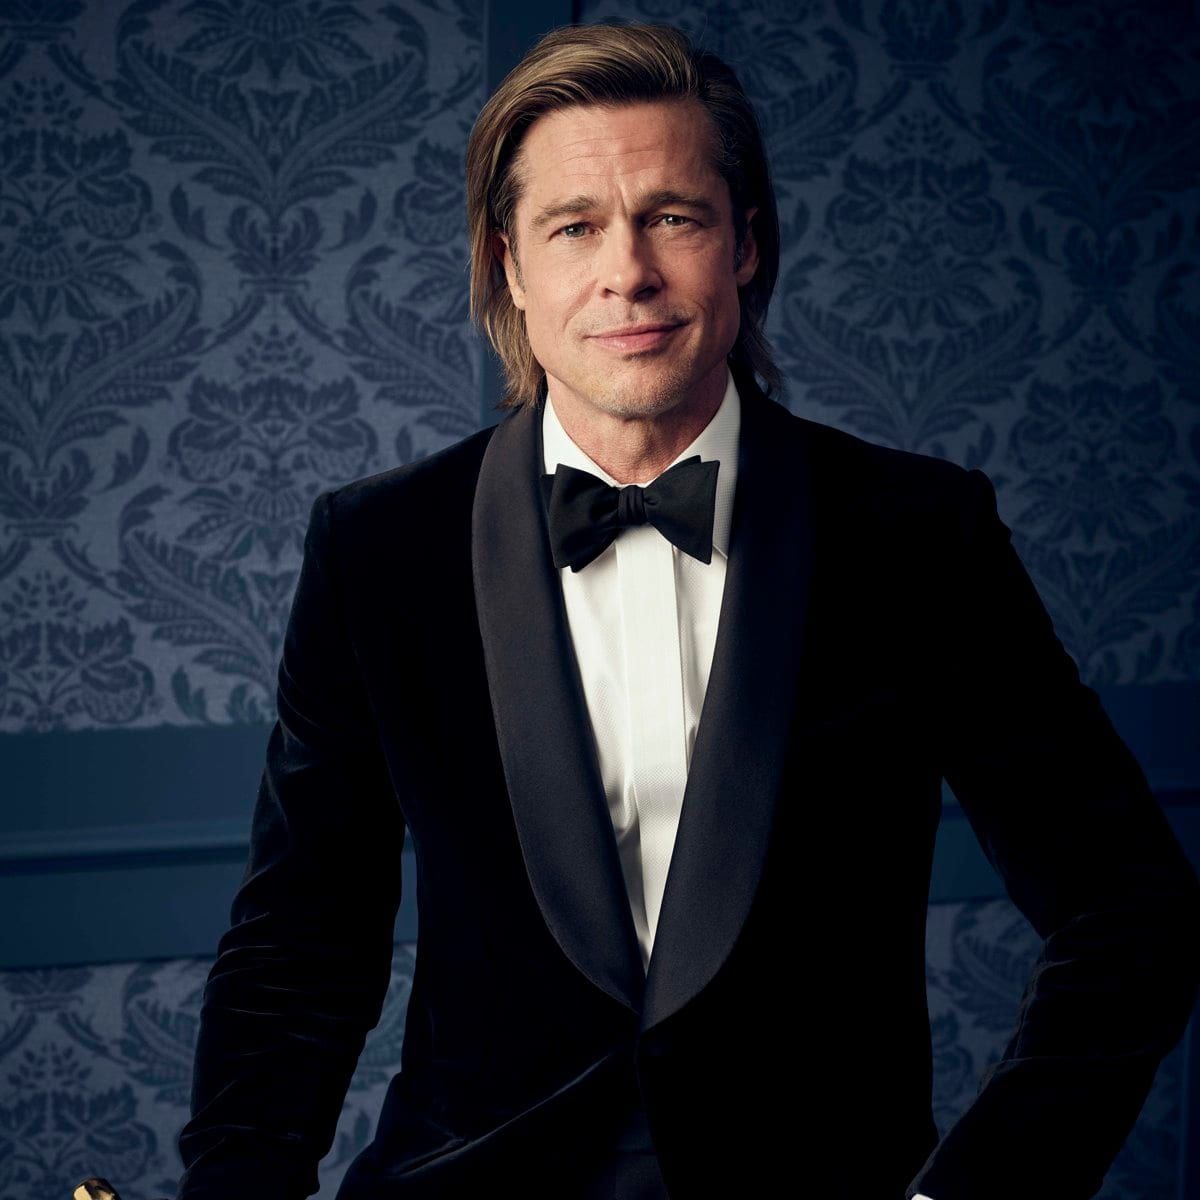 Brad Pitt at the 2020 Oscars wearing long hair again